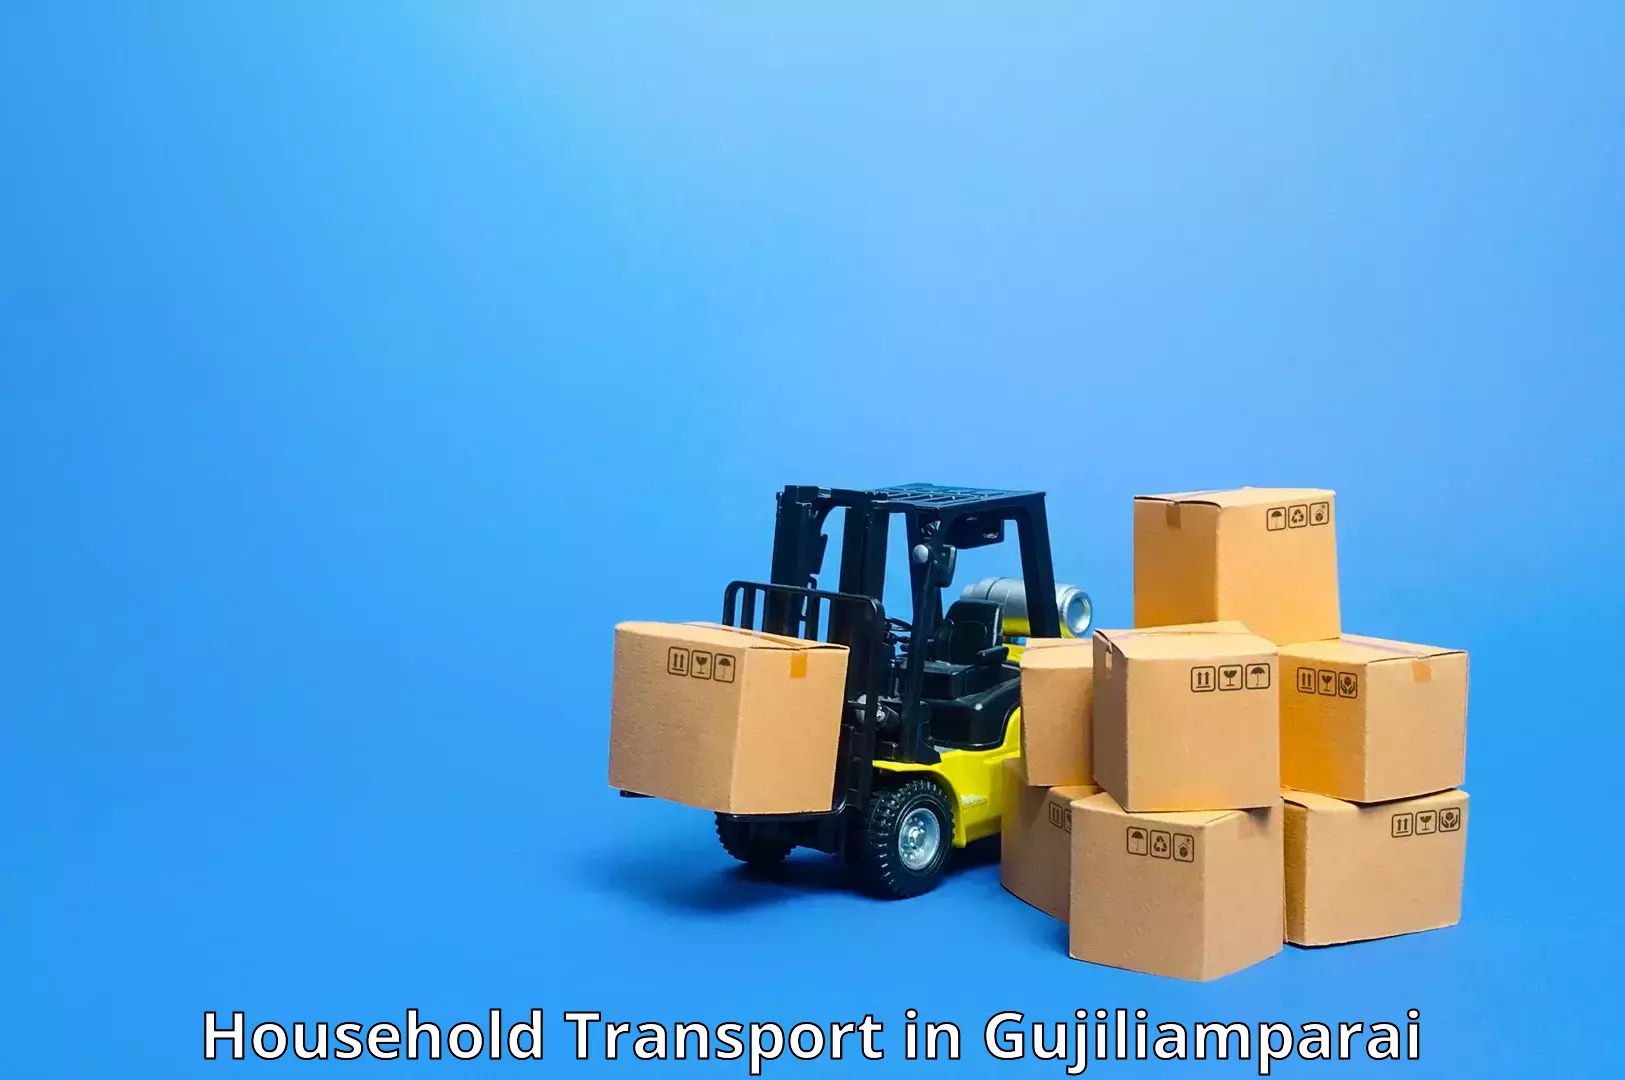 Household goods transport in Gujiliamparai